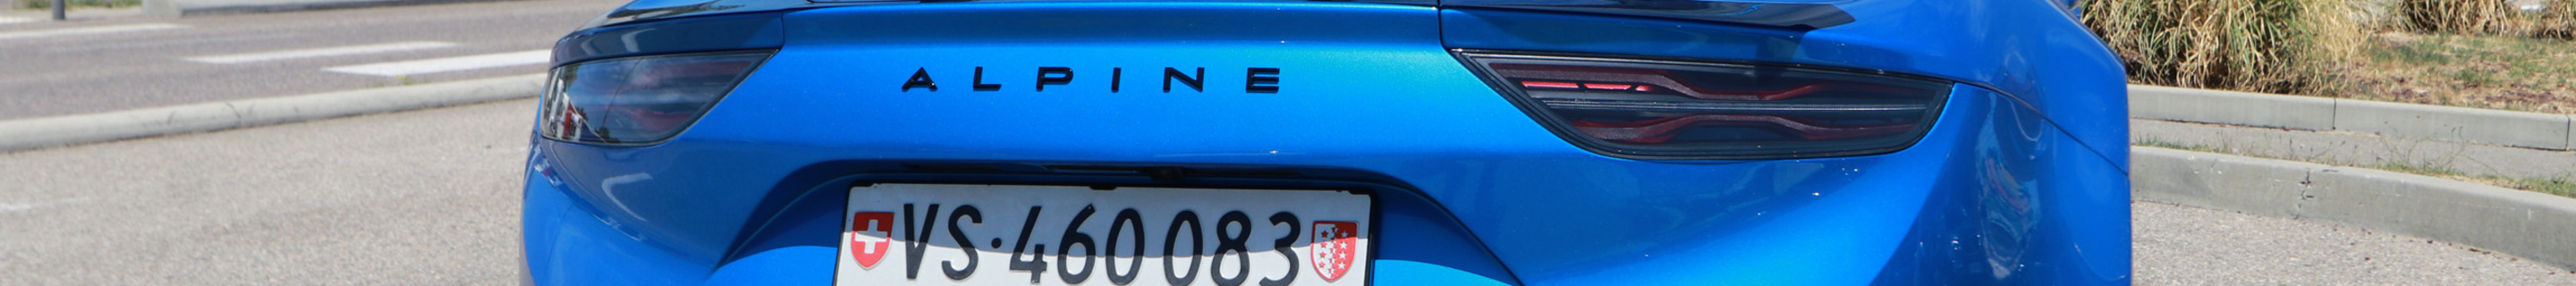 Alpine A110 S 2022